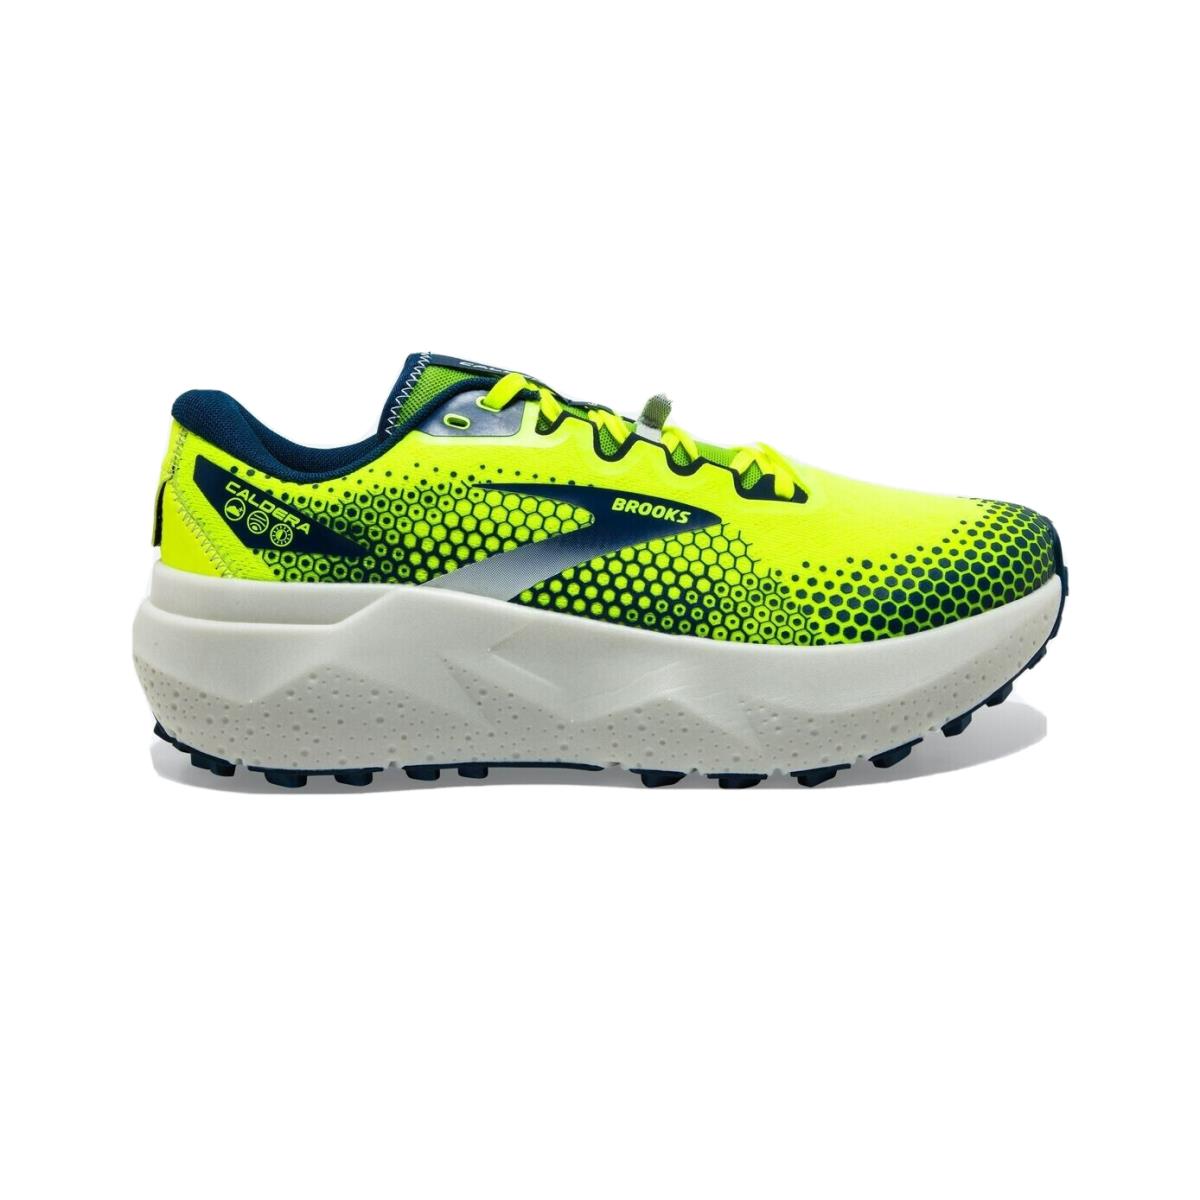 Men Brooks Caldera 6 Trail Running Shoes Size 11 Yellow Navy Blue White 110379 - Yellow